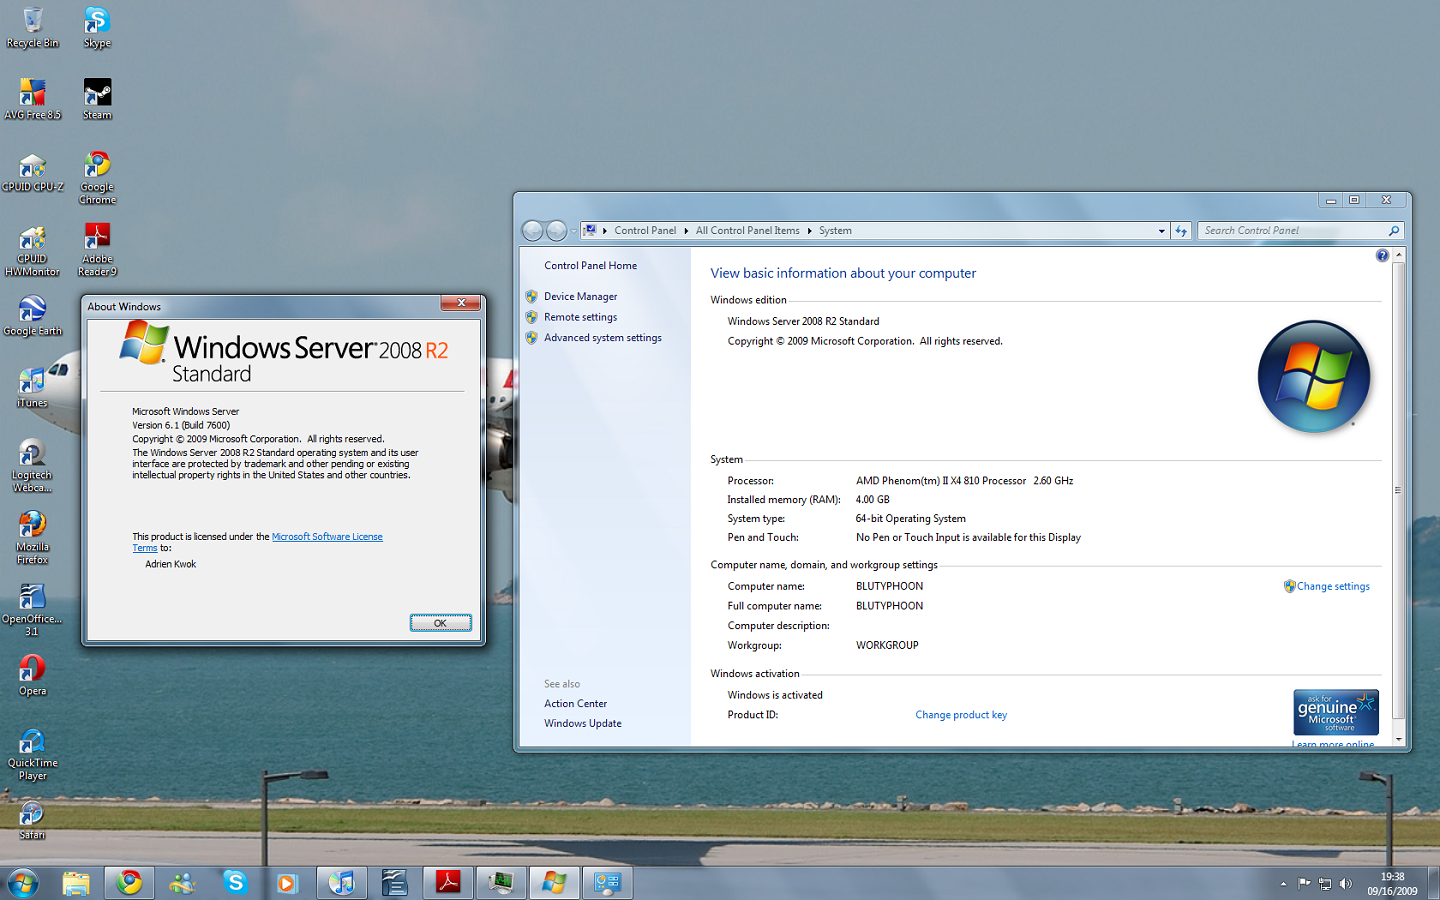 Partition Magic Server for Windows 2008 Server R2